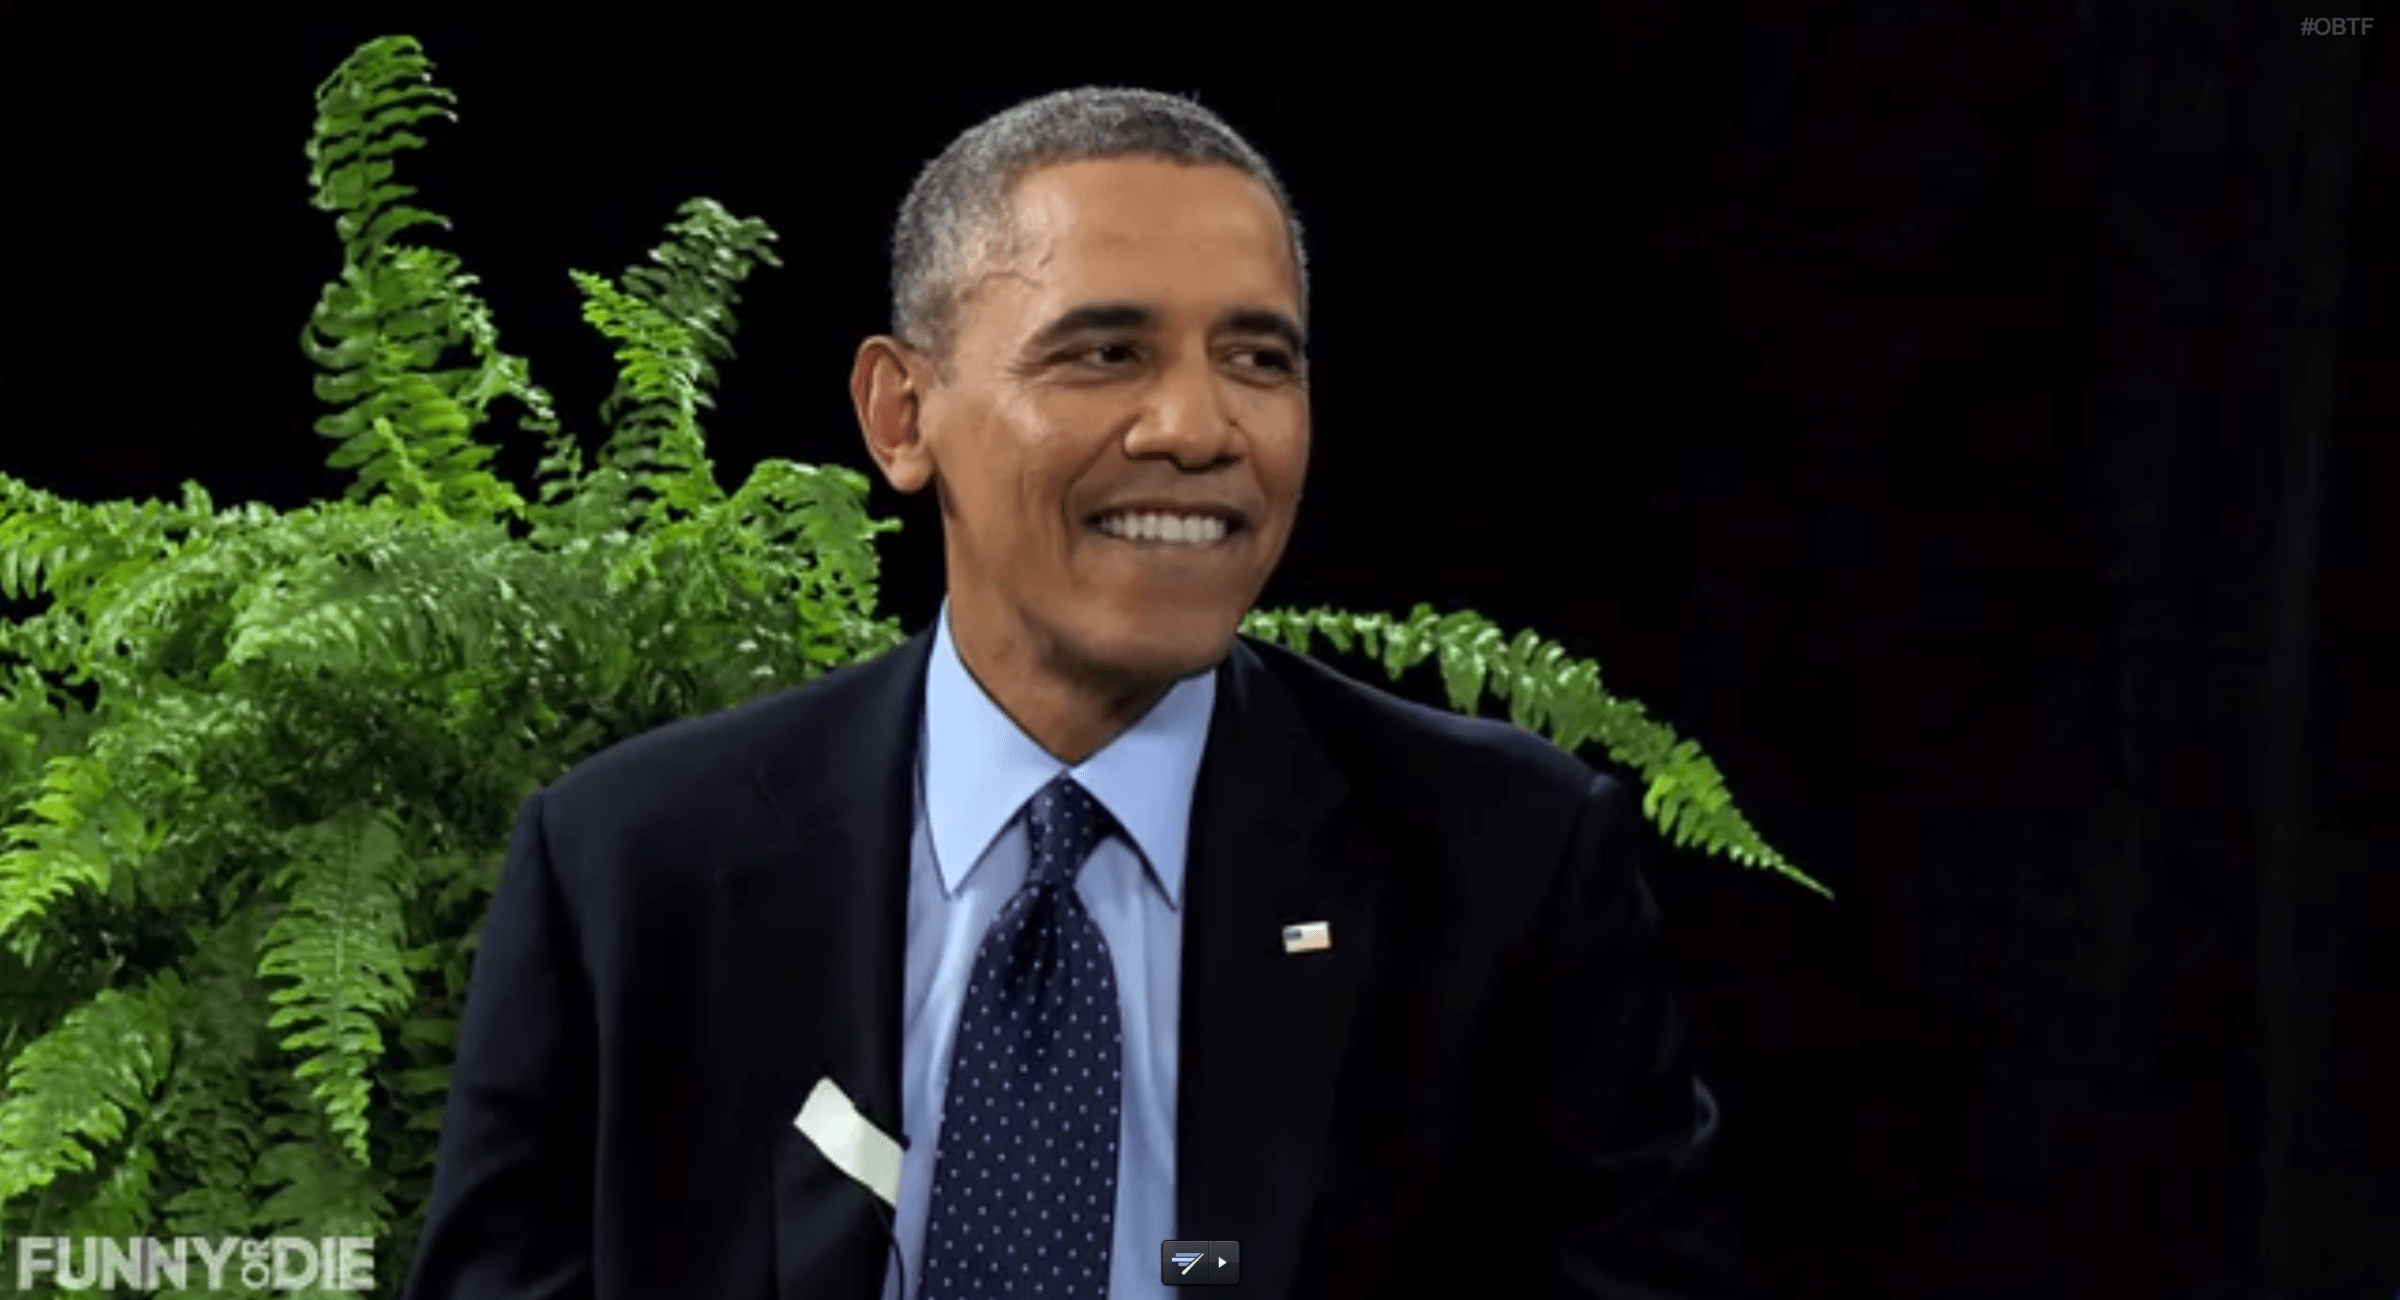 Barack Obama on "Between Two Ferns" with Zach Galifianakis